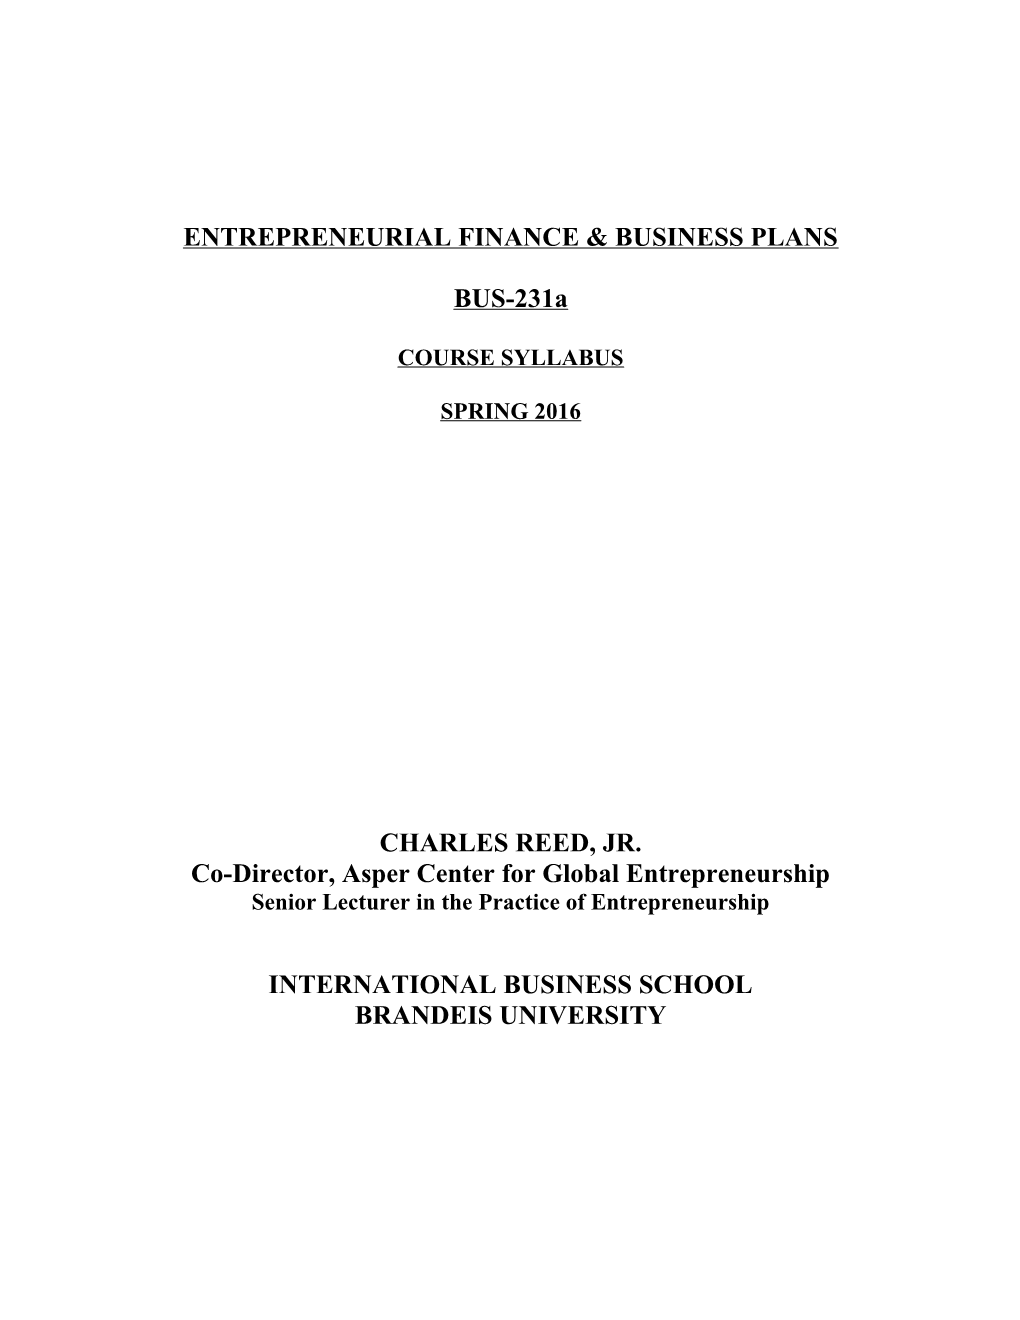 Entrepreneurial Finance & Business Plans